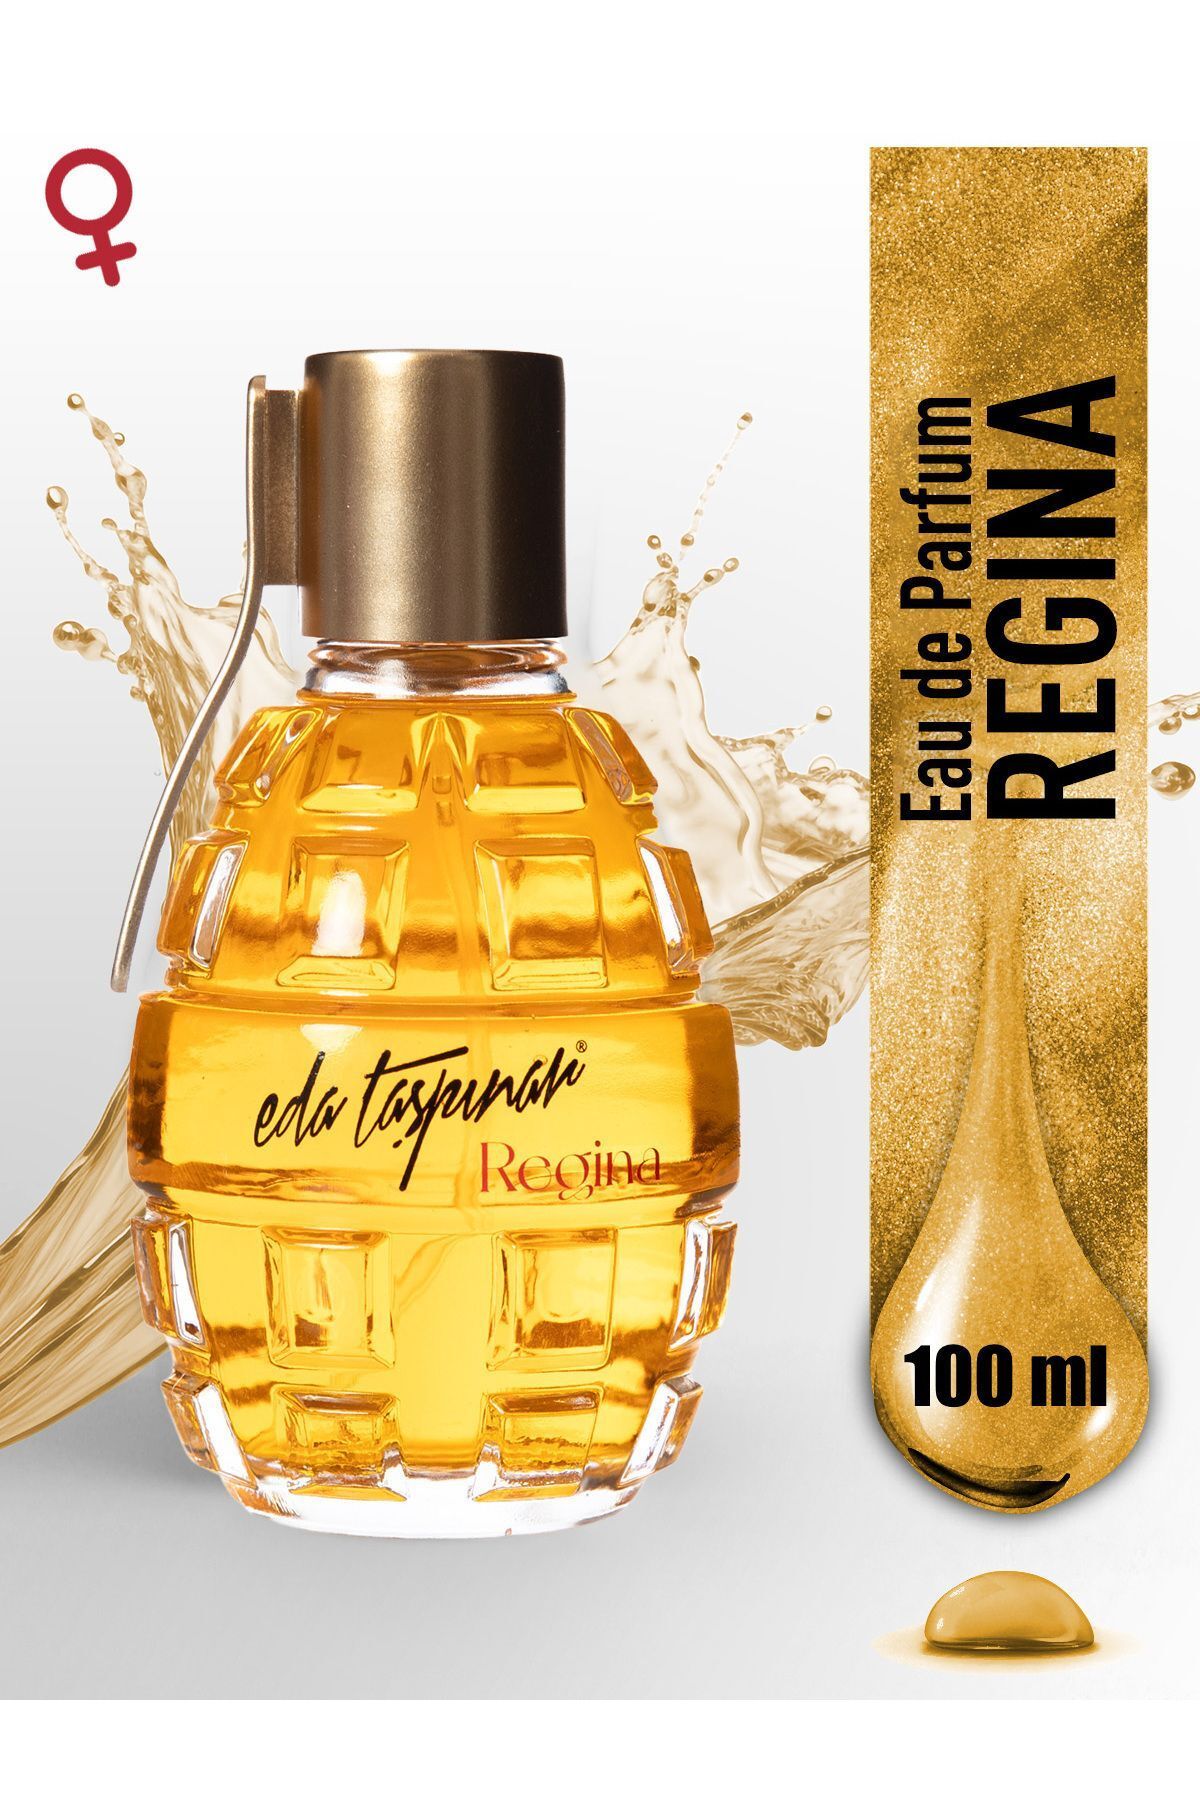 Eda Taşpınar Regina Kadın Parfüm Edp - 100 ml